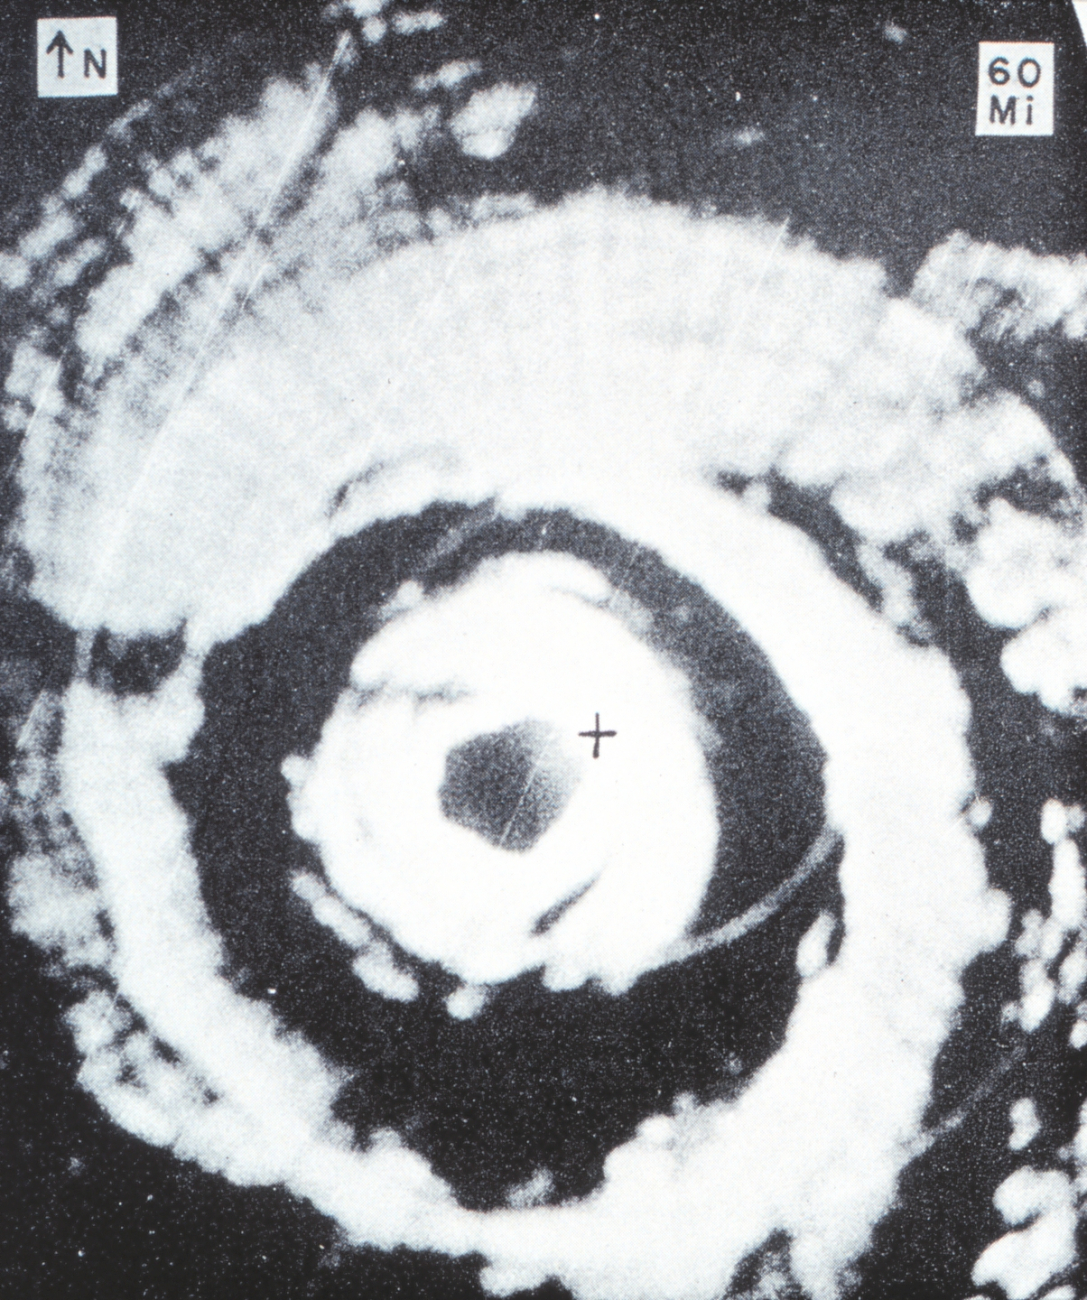 Aircraft APS-45 radar image of Hurricane Donna